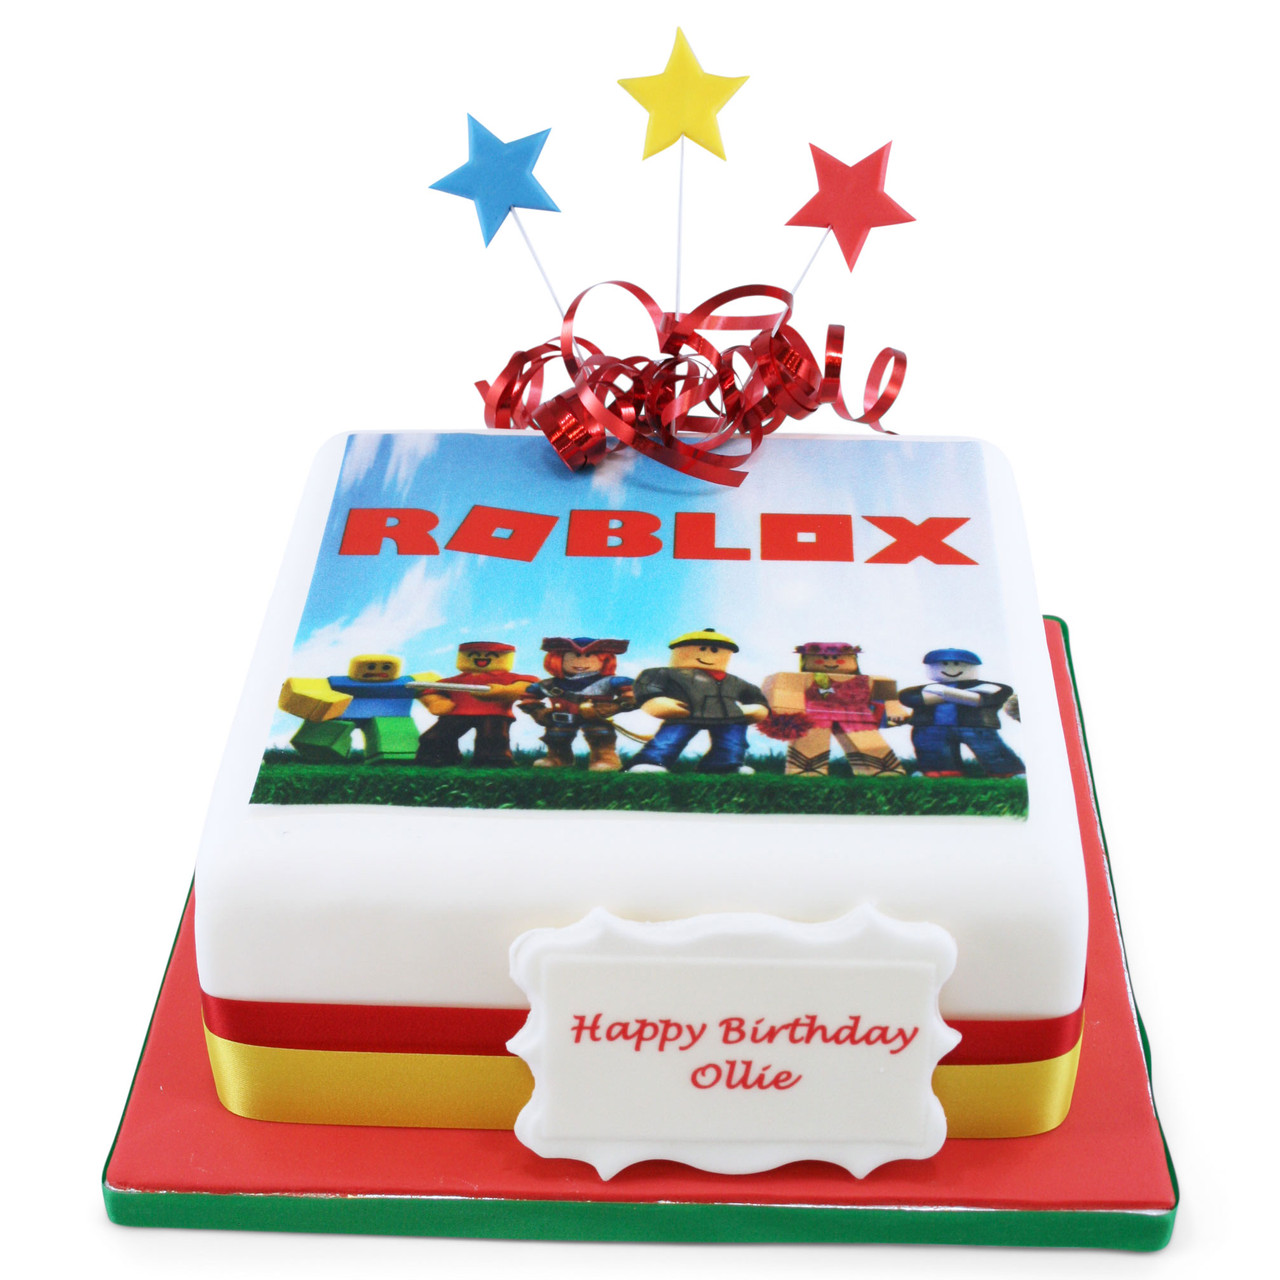 Roblox party  Roblox cake, Cake, Birthday cake